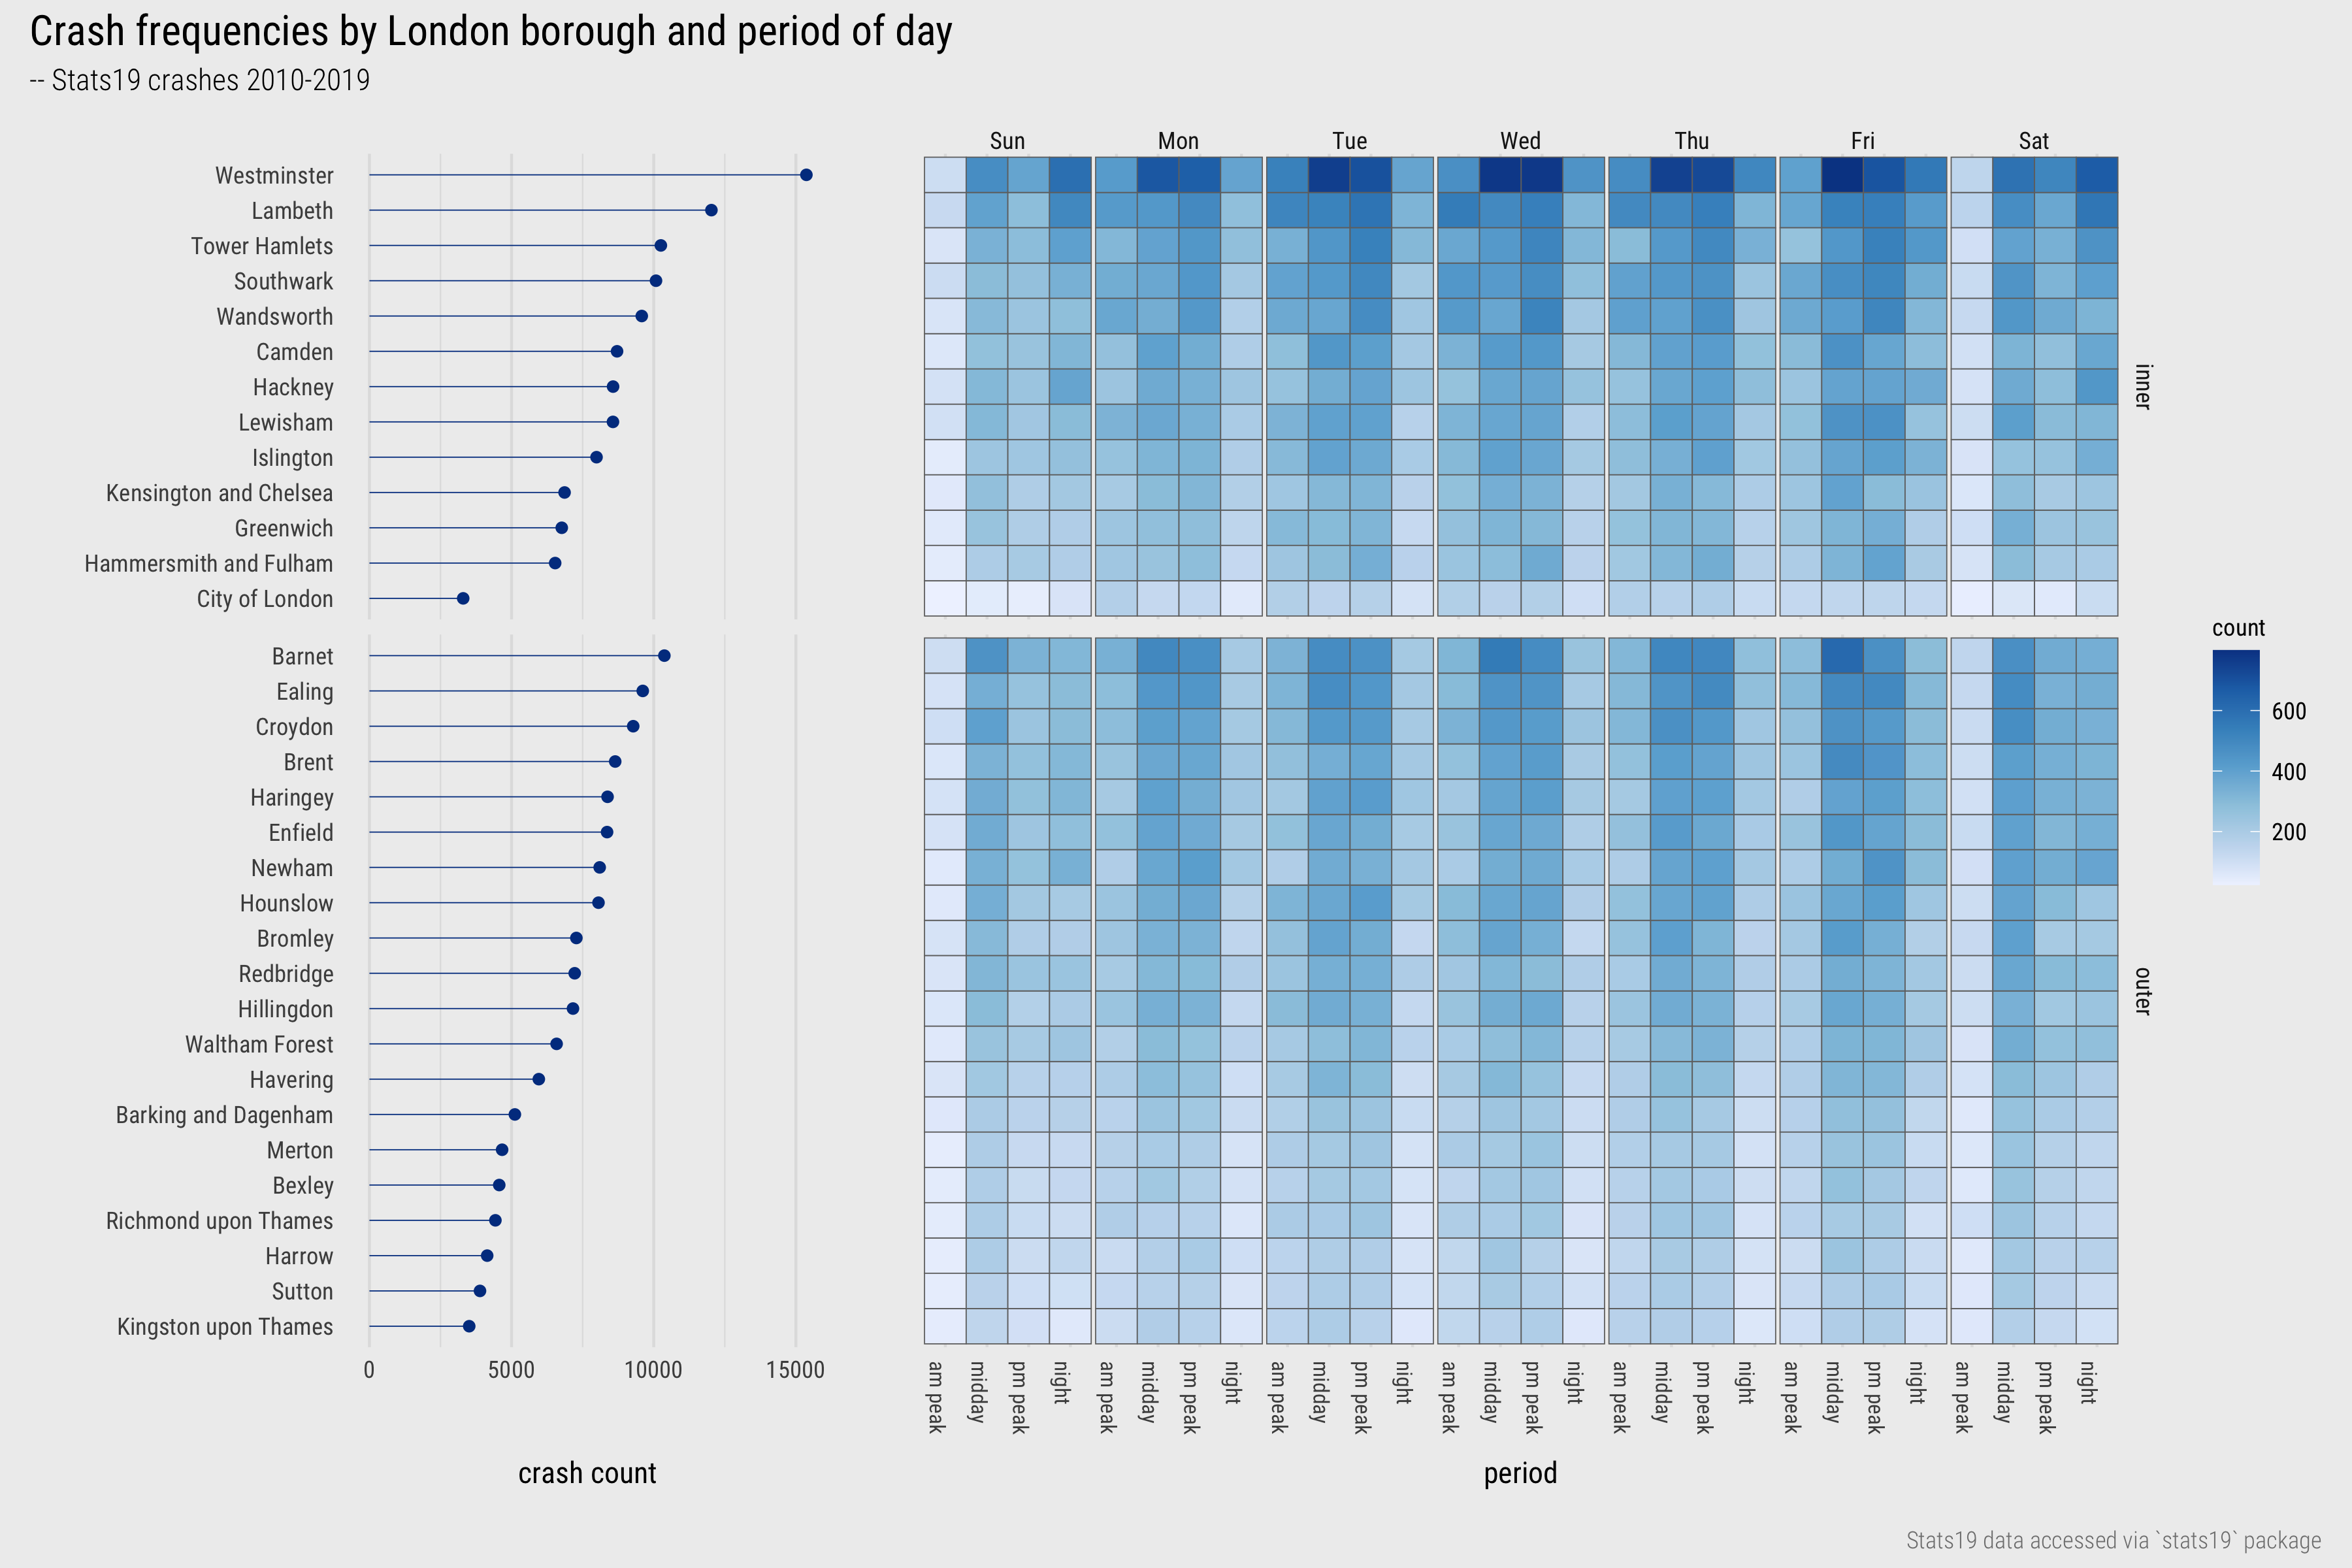 [Cleveland dot plots](https://en.wikipedia.org/wiki/Dot_plot_(statistics)) and heatmaps summarising crash frequencies by London borough and period of day.